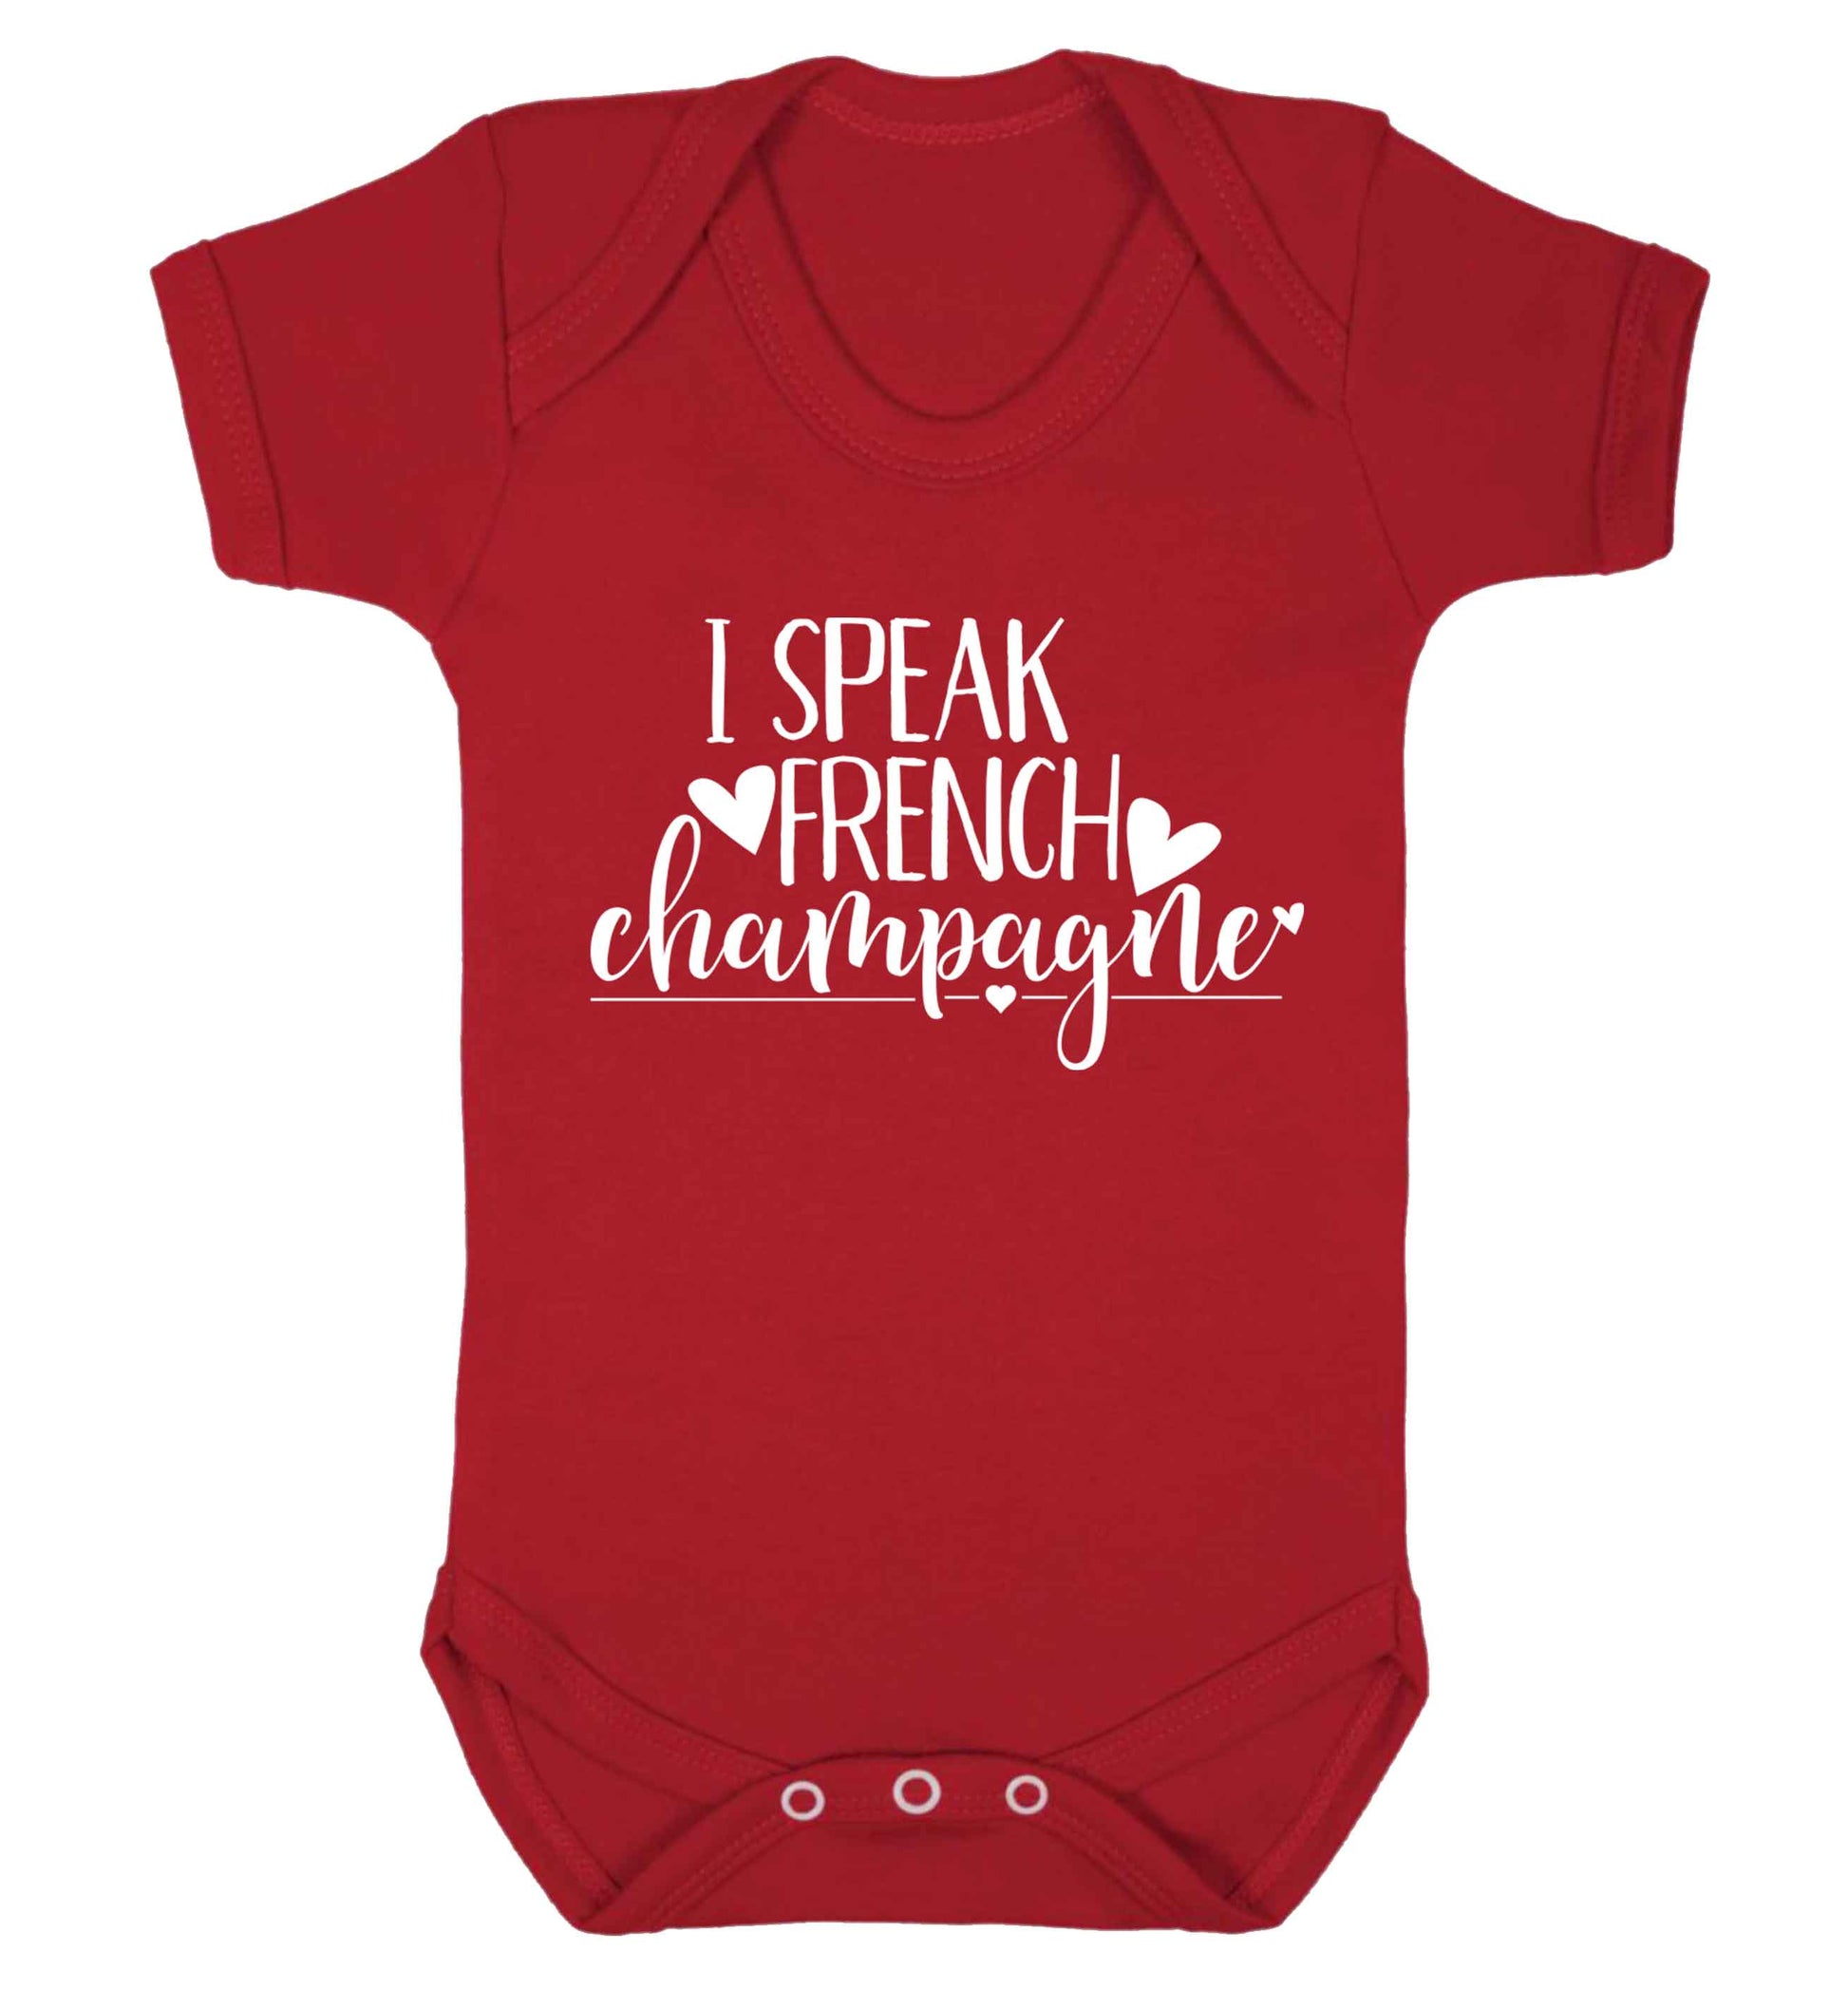 I speak french champagne Baby Vest red 18-24 months